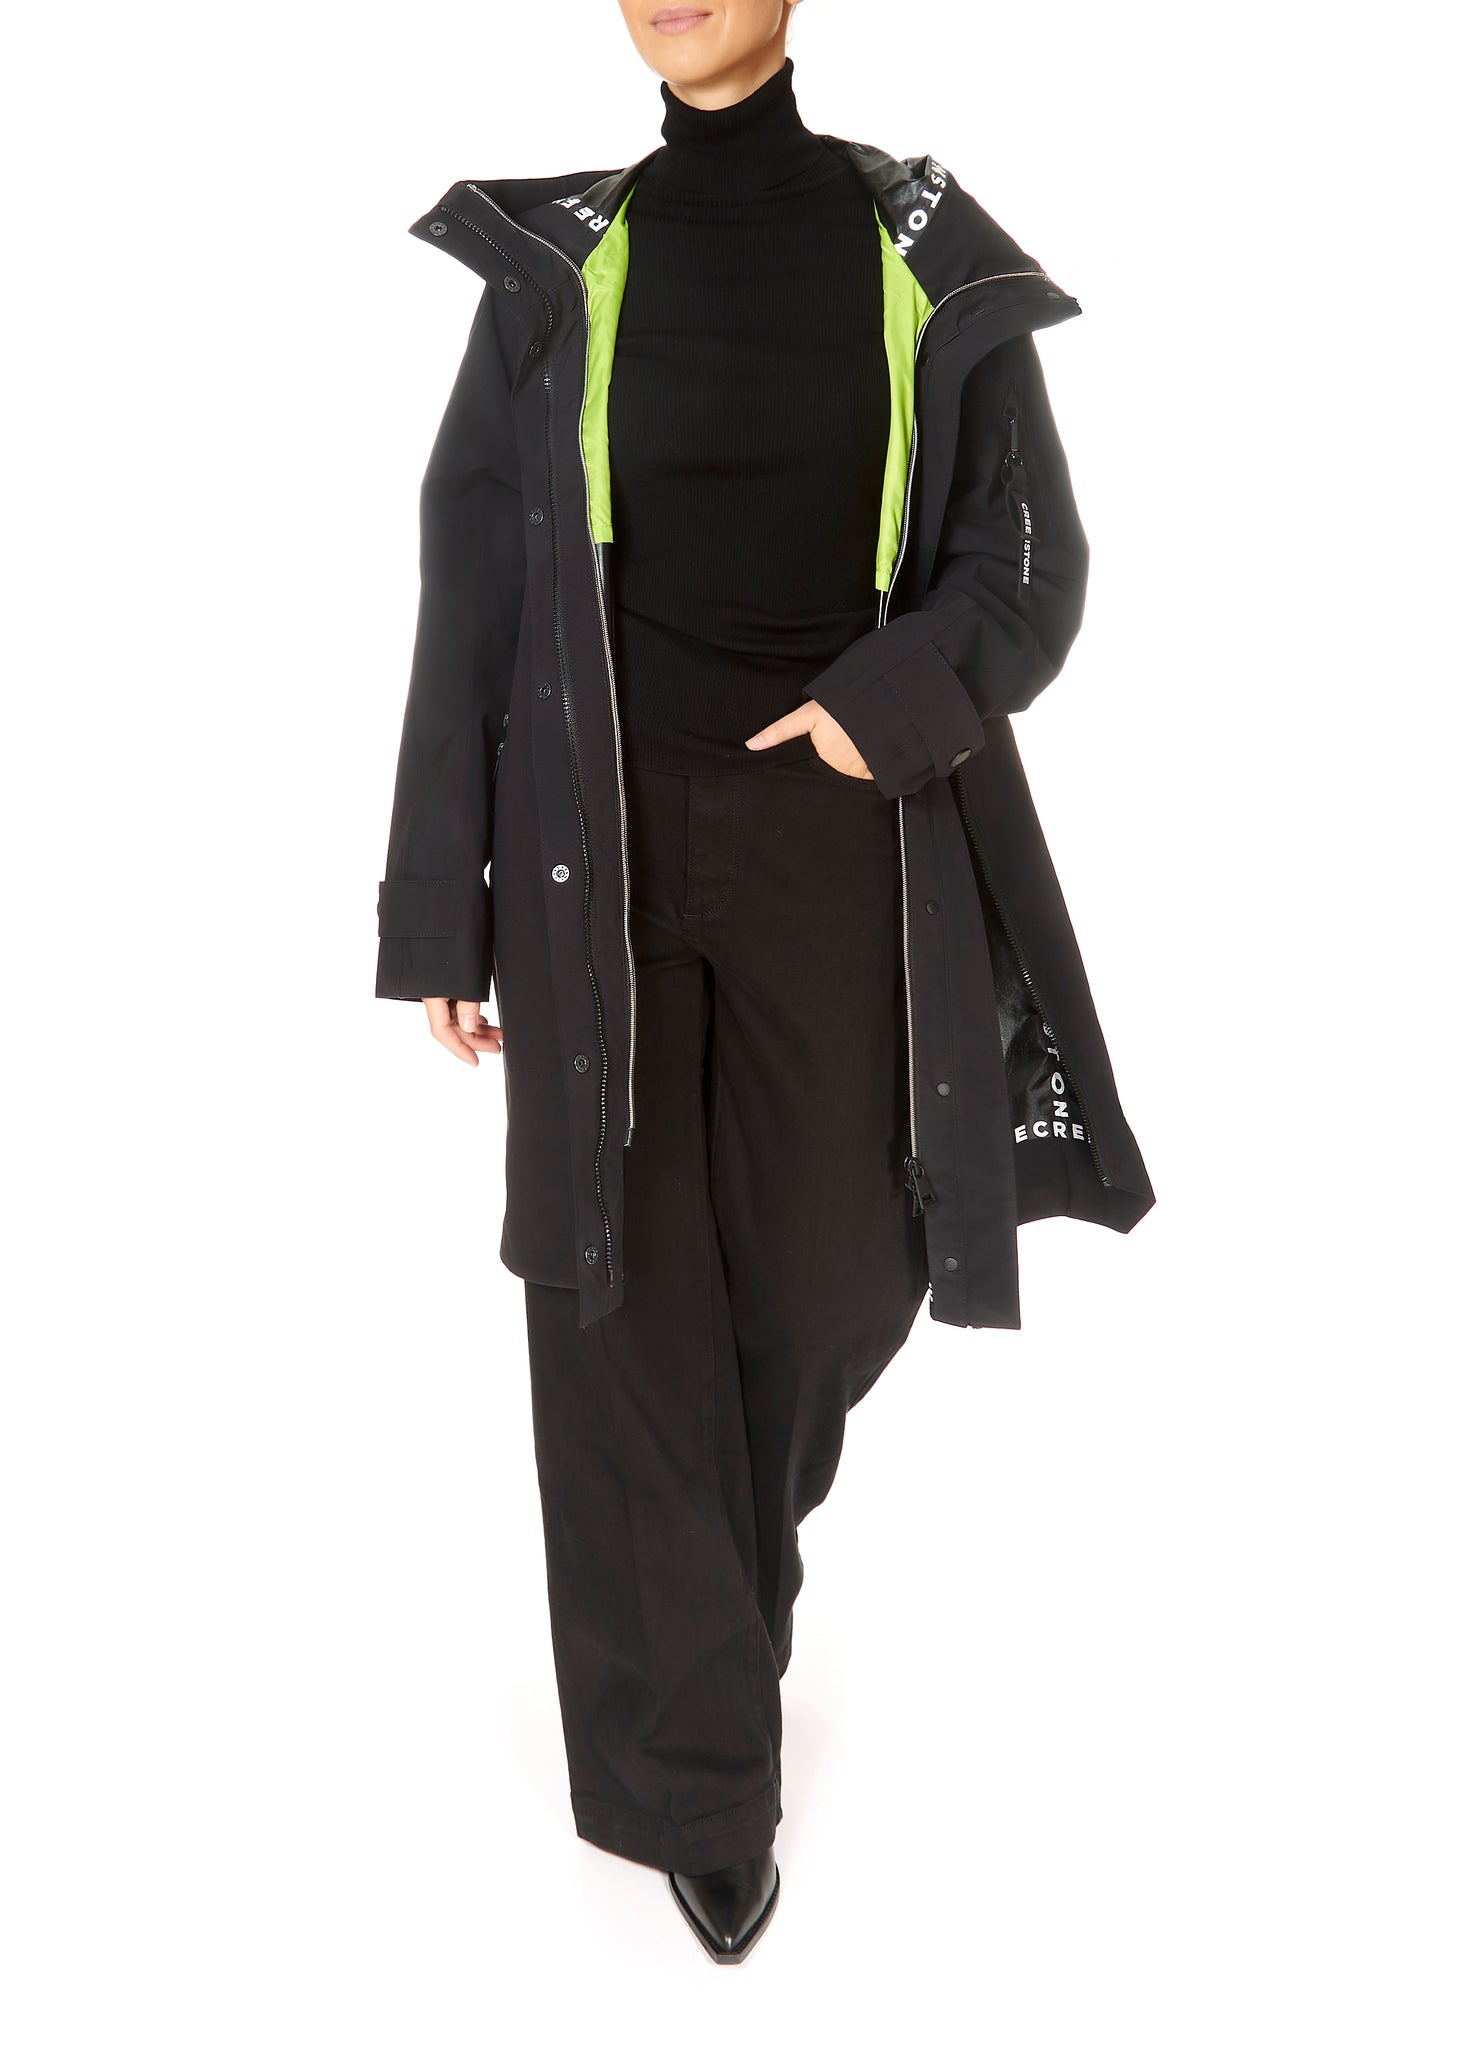 Creenstone Raincoat with Detachable Inside Jacket Black